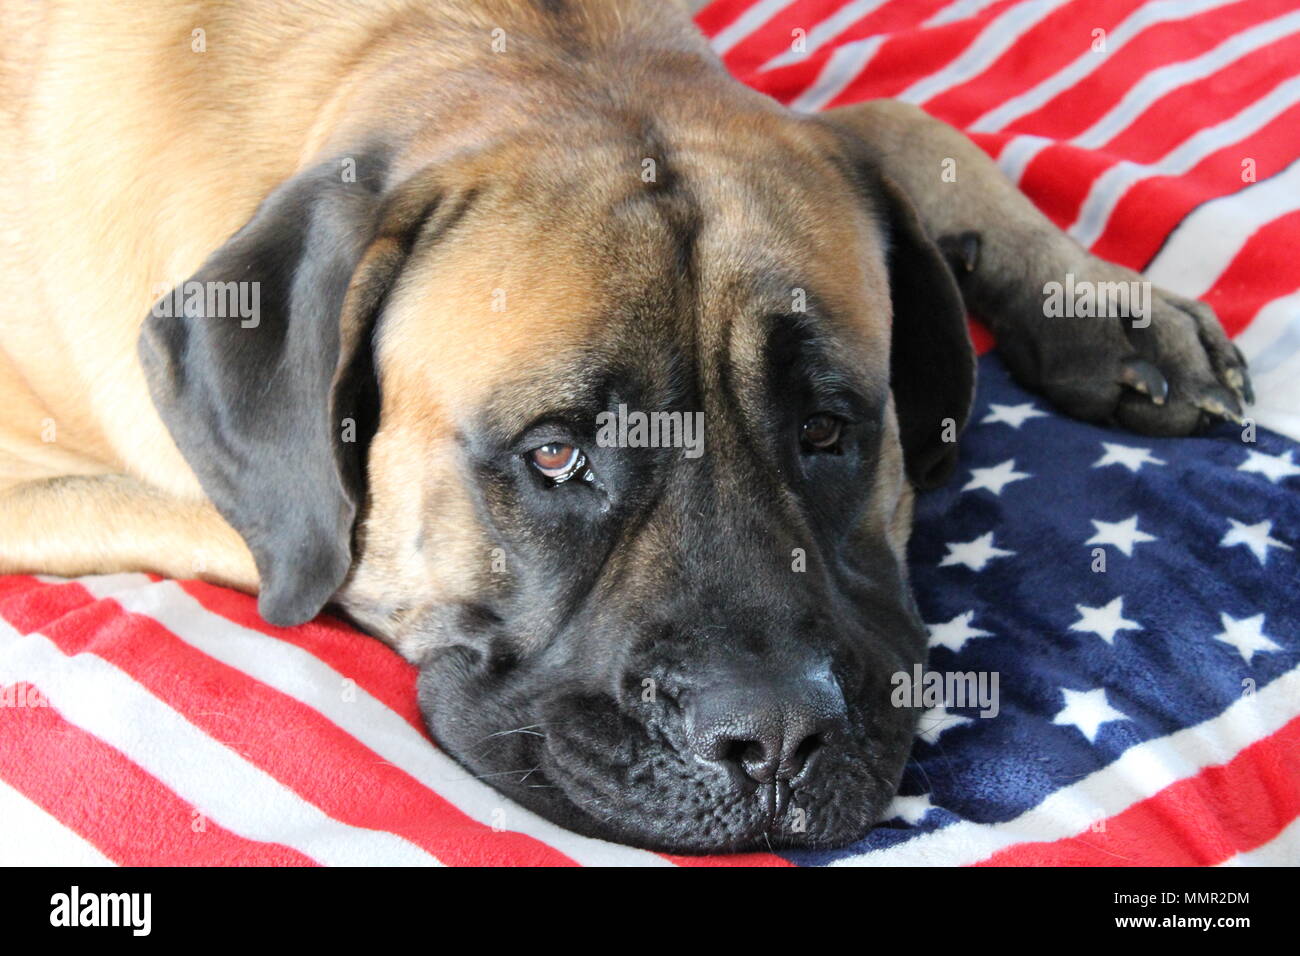 Dog on American flag blanket Stock Photo